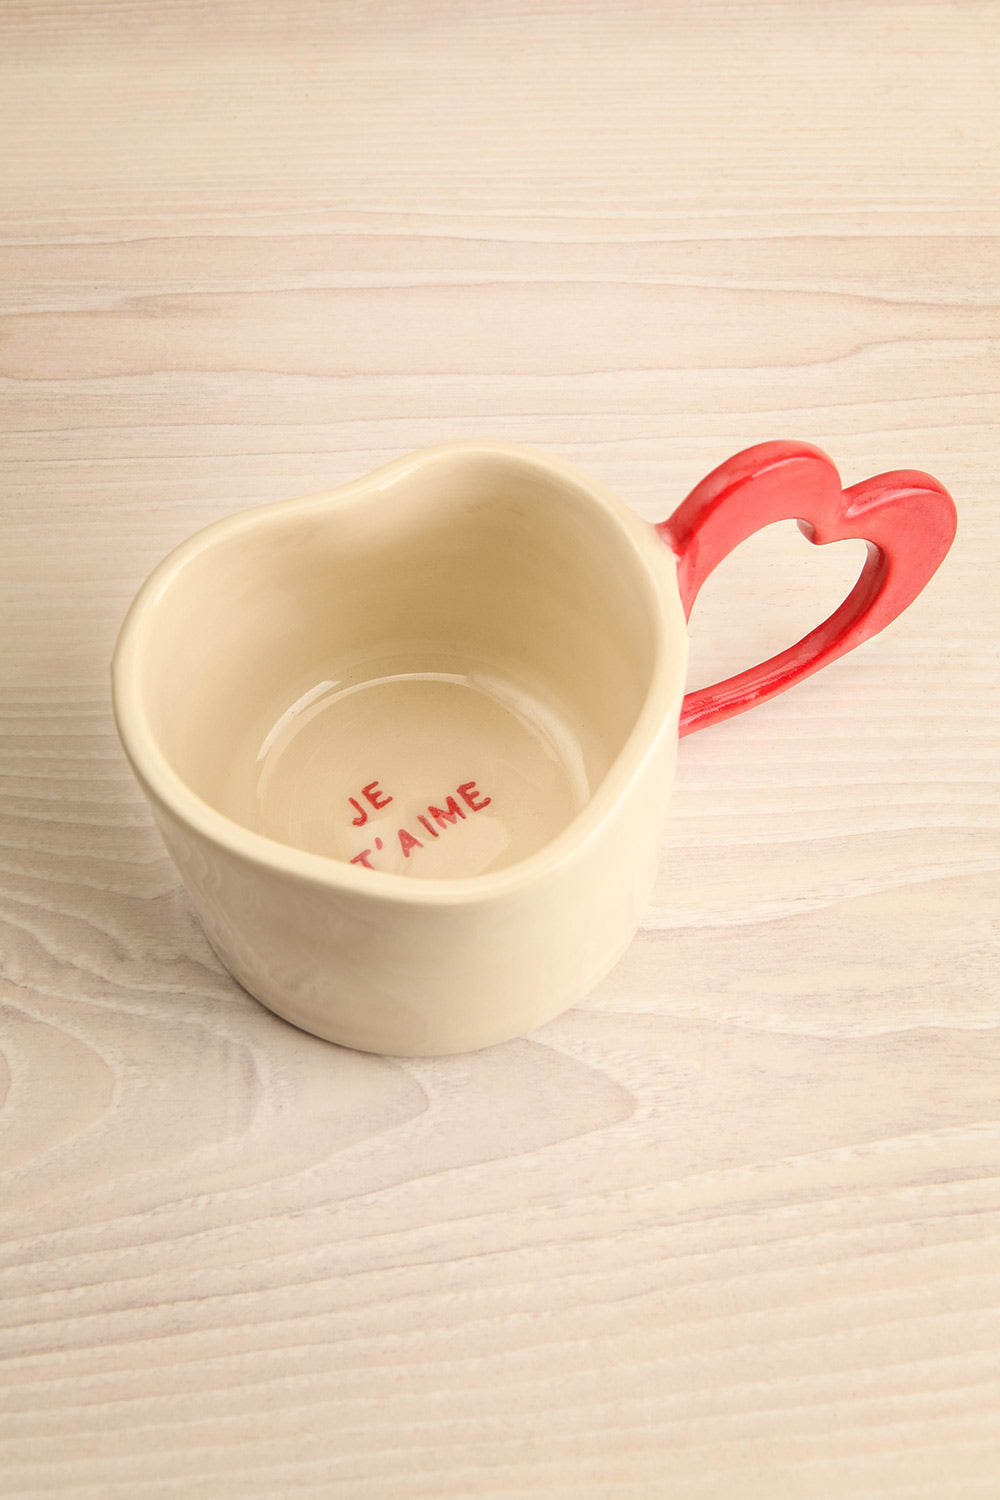 Amour Heart-Shaped Mug | Maison garçonne inside view